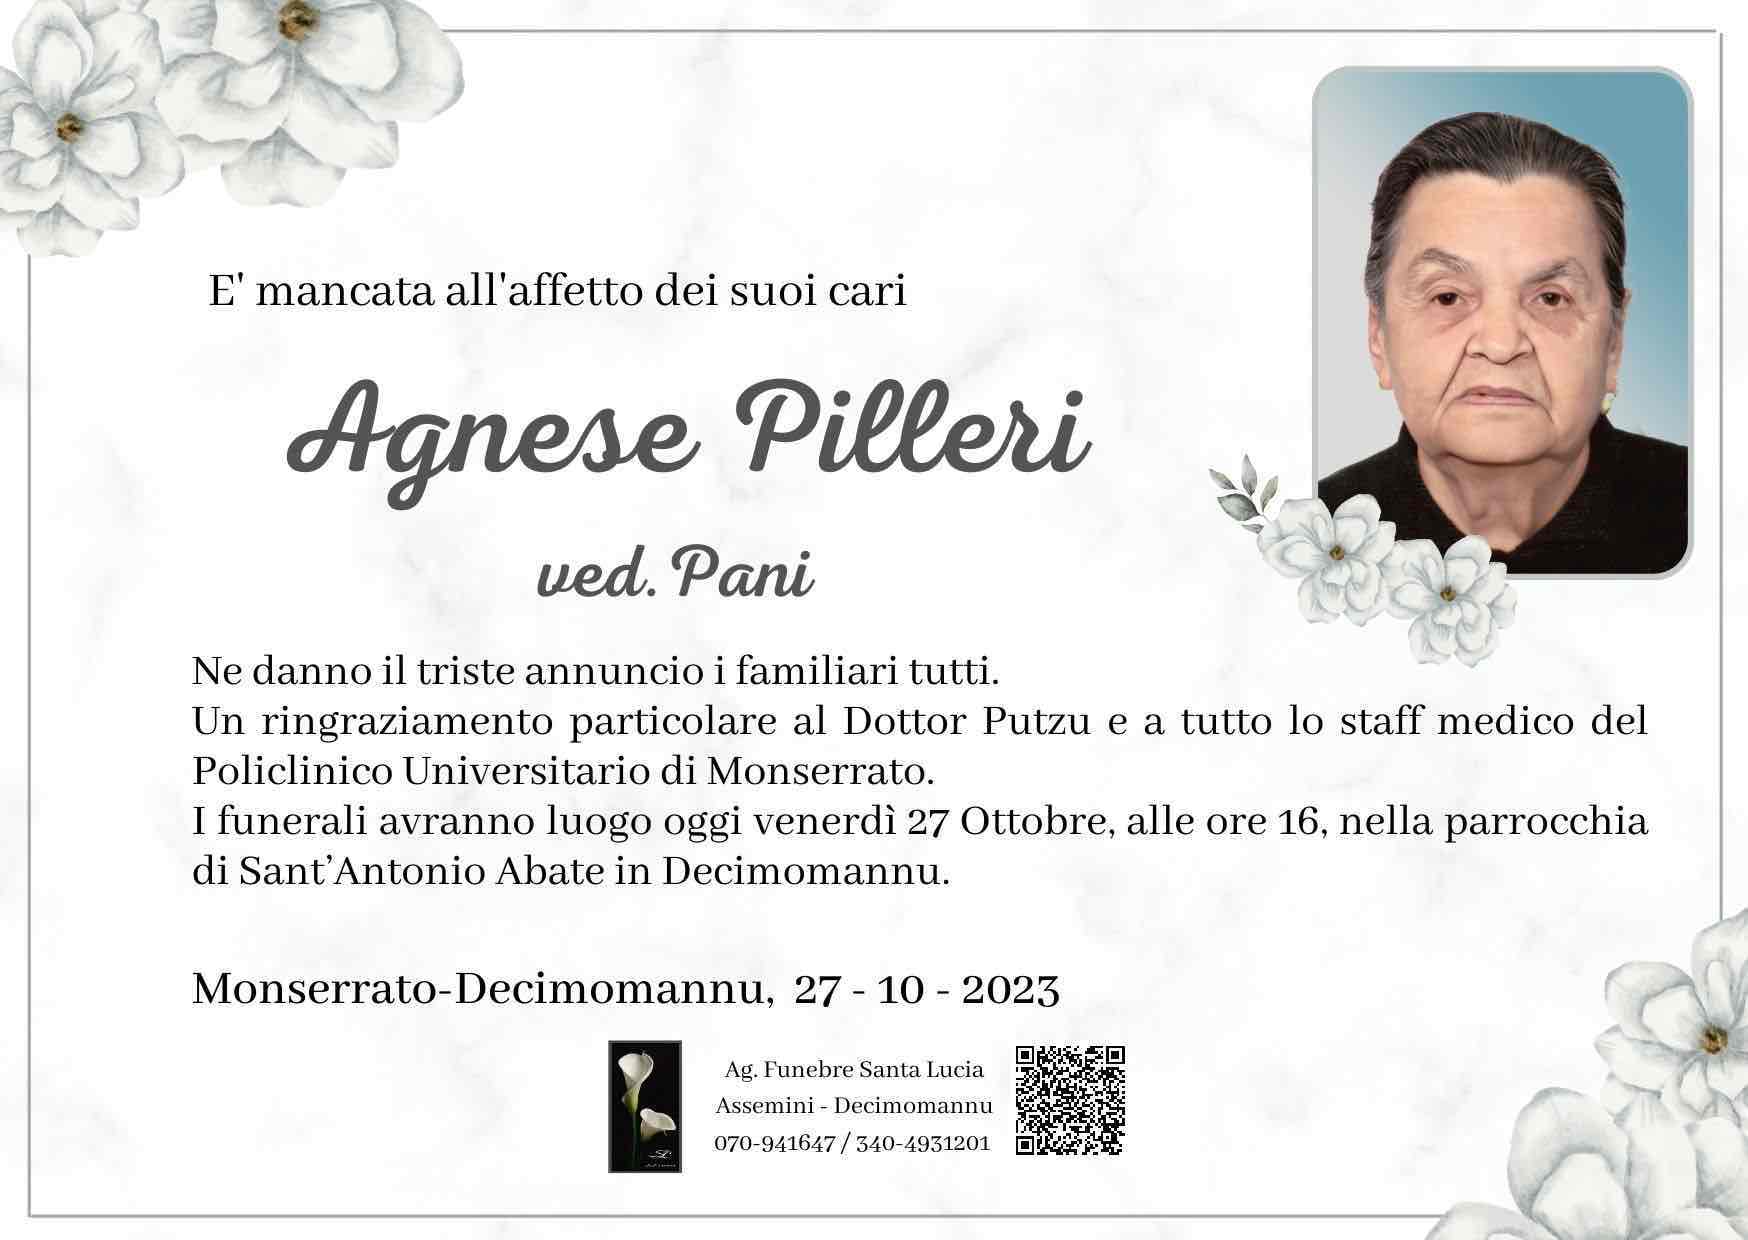 Agnese Pilleri